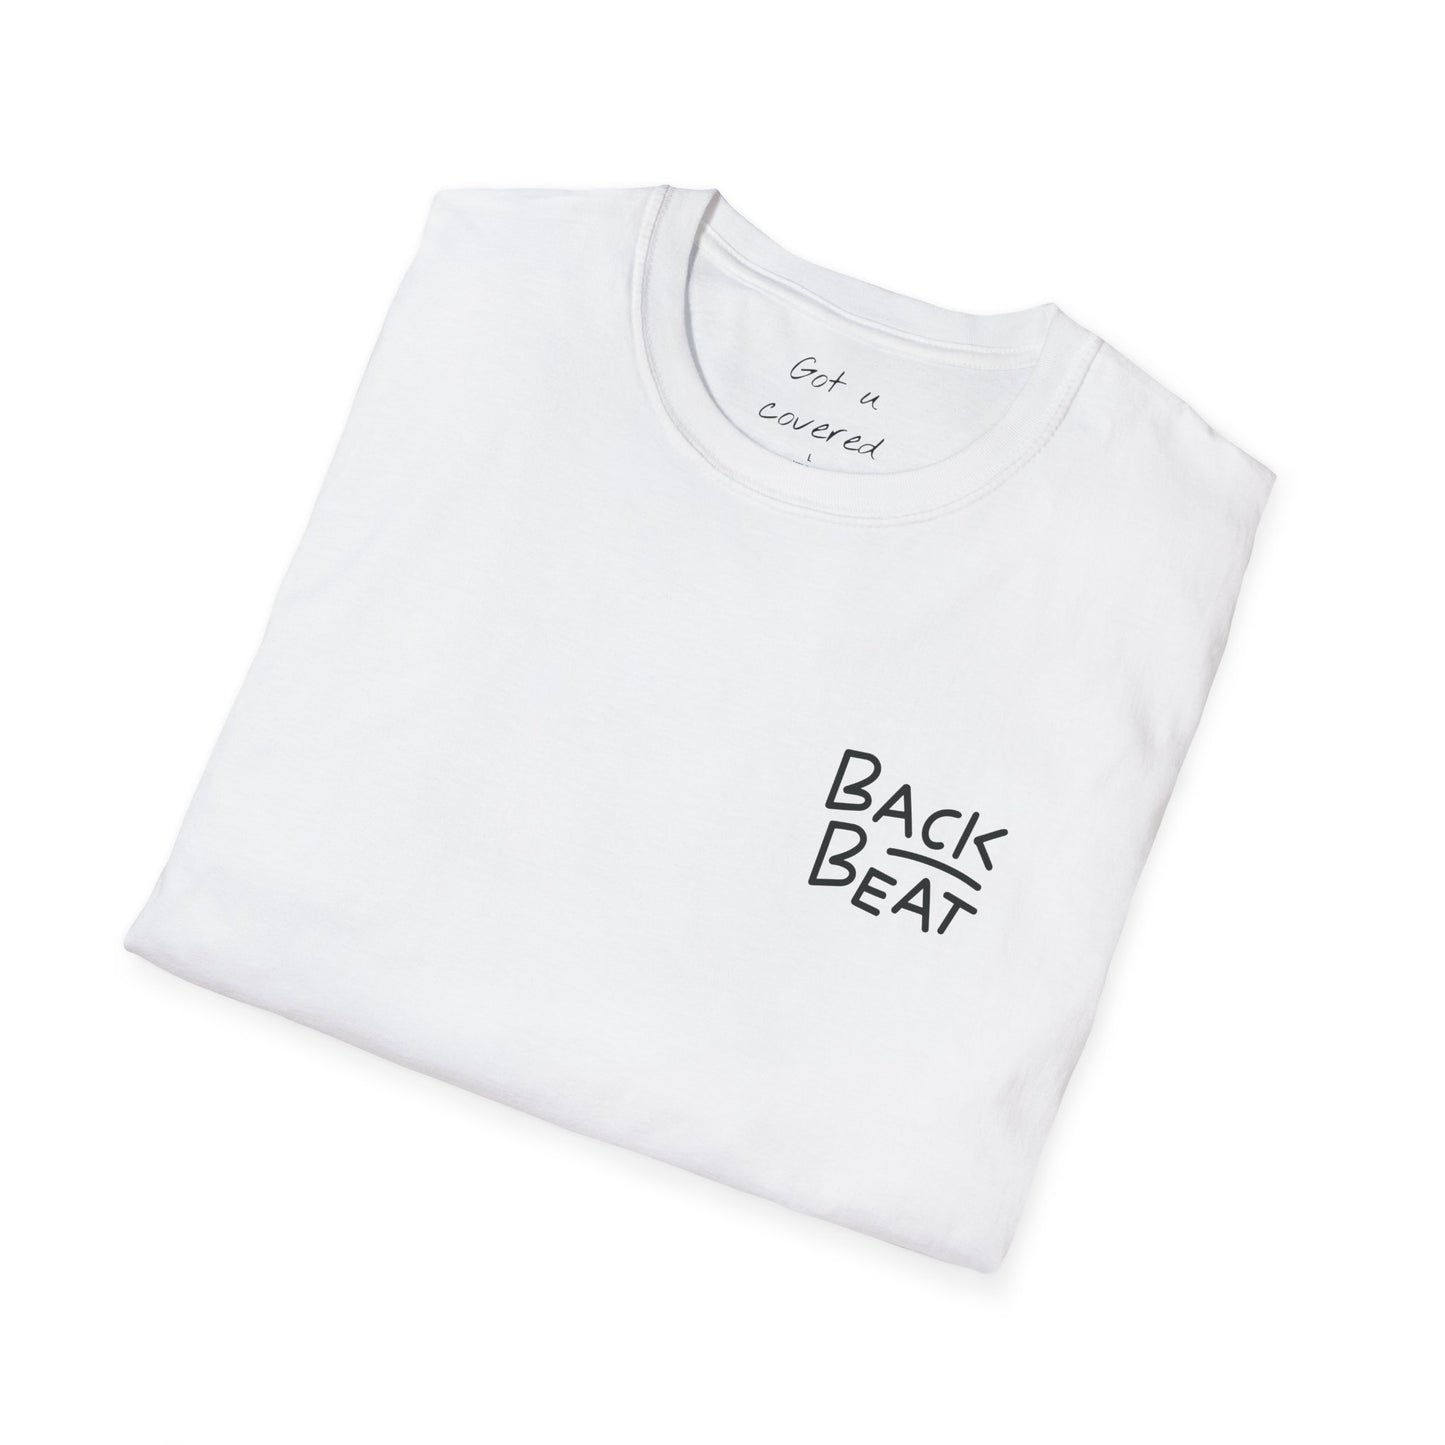 Surreal Wildlife Fusion T-Shirt | Artistic Tee | Backbeat Wear